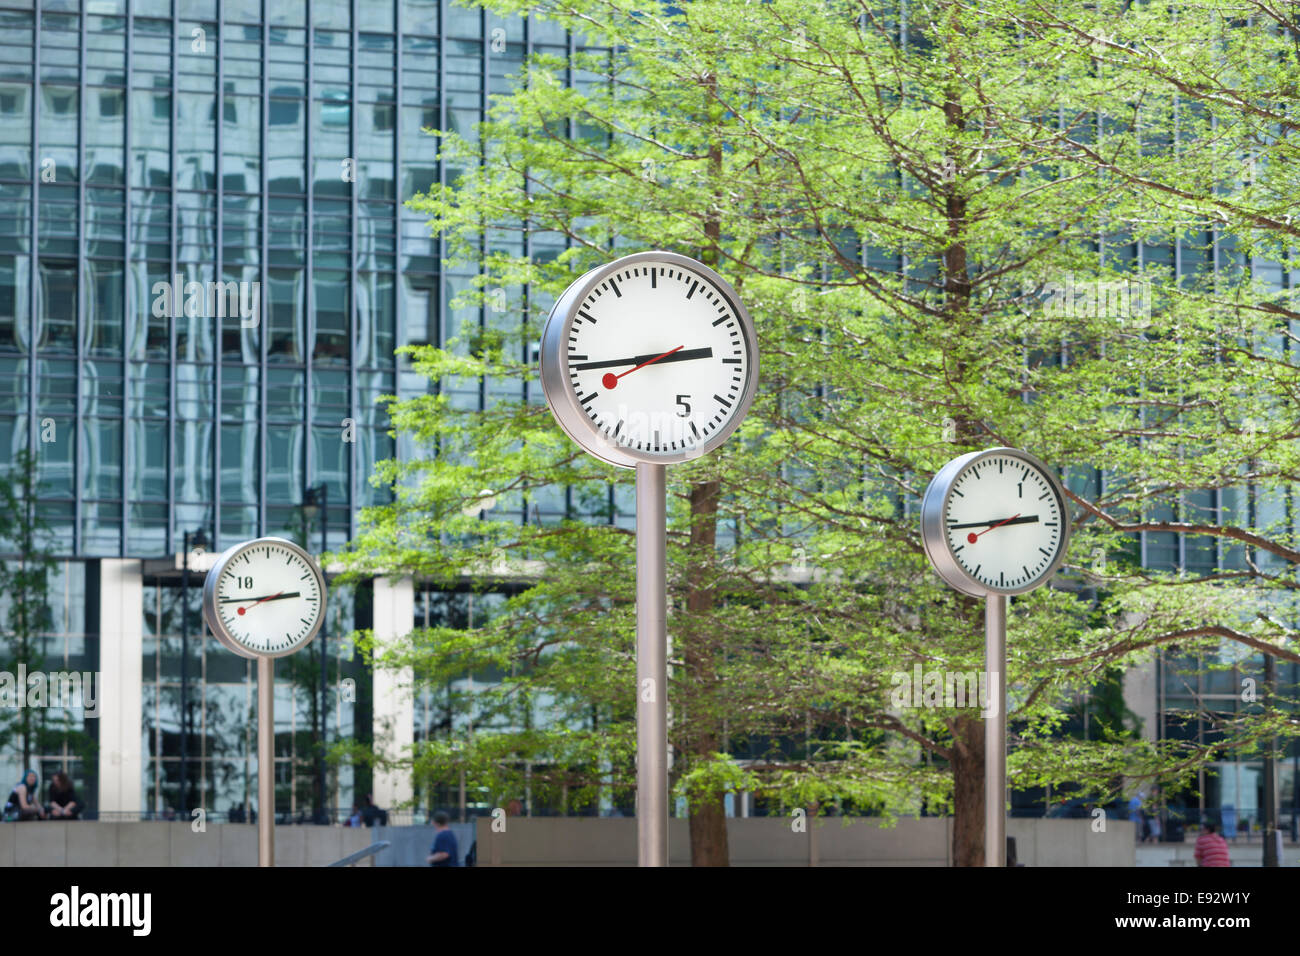 Horloges Canary Wharf, London, UK Banque D'Images